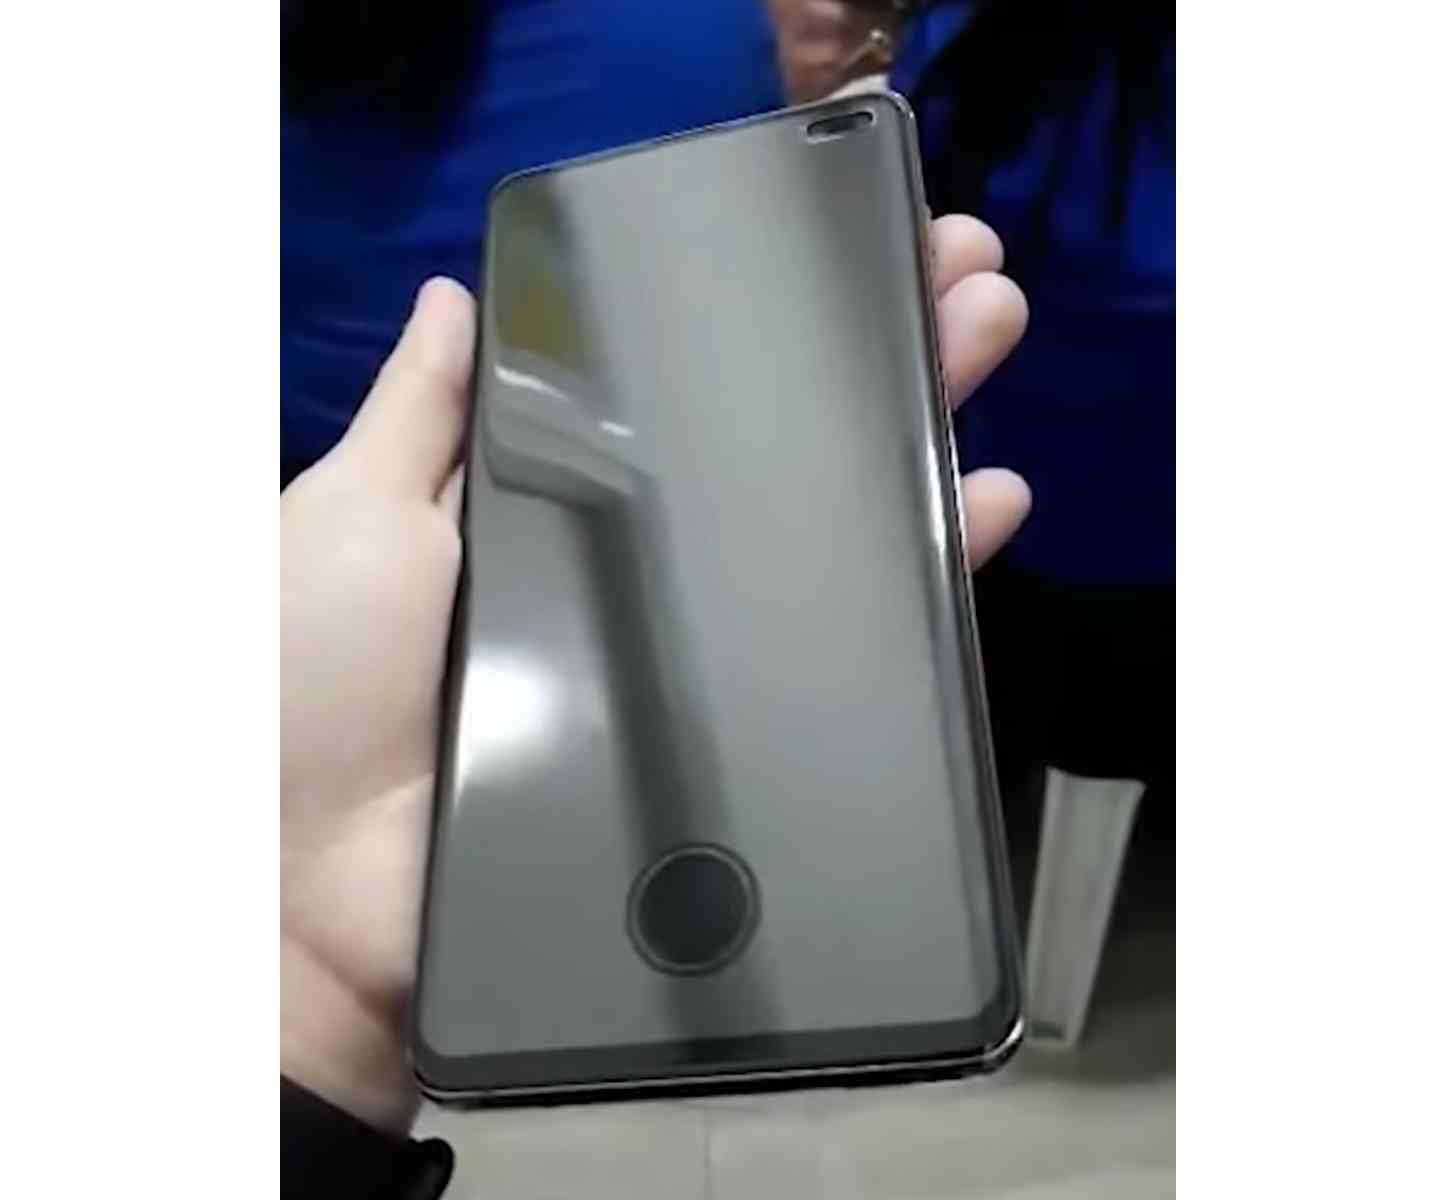 Samsung Galaxy S10+ screen protector hole